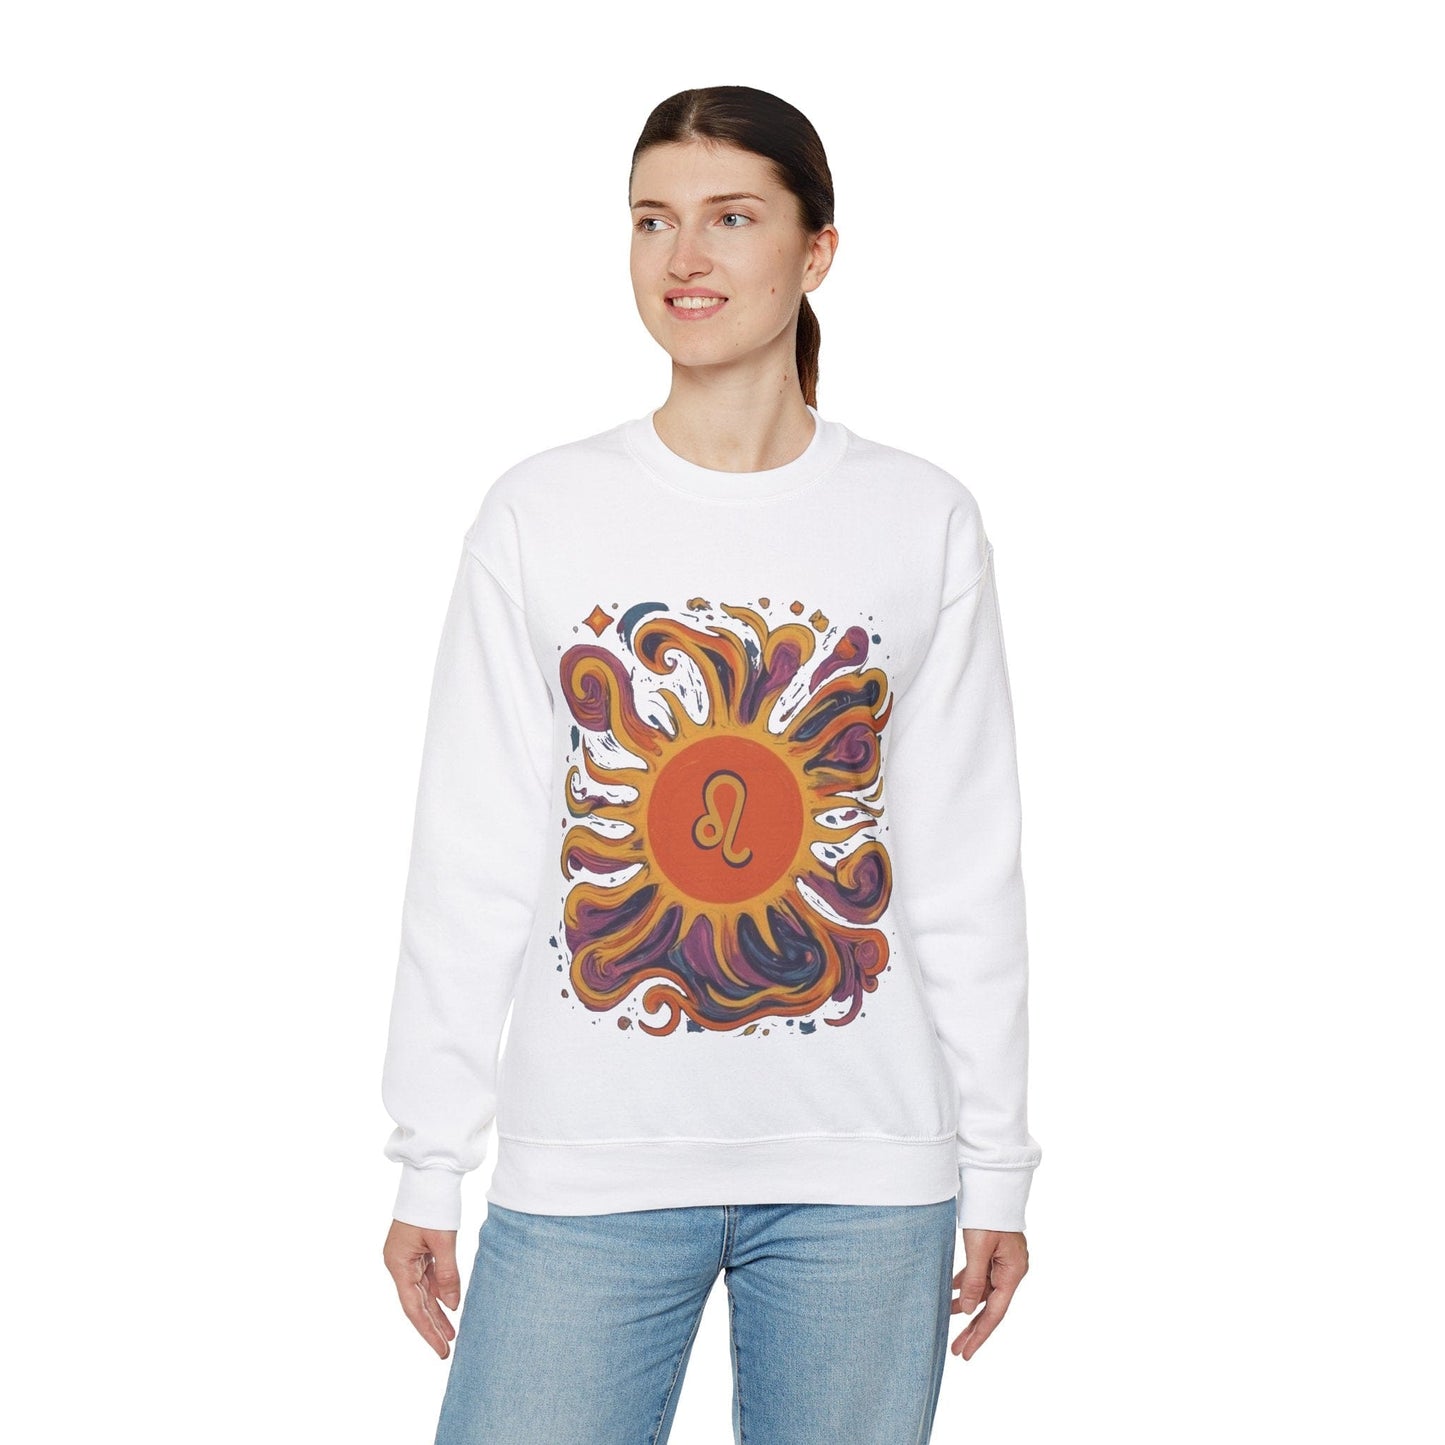 Sweatshirt Leo Majestic Sun Soft Sweater: Royal Warmth for the Lion's Heart